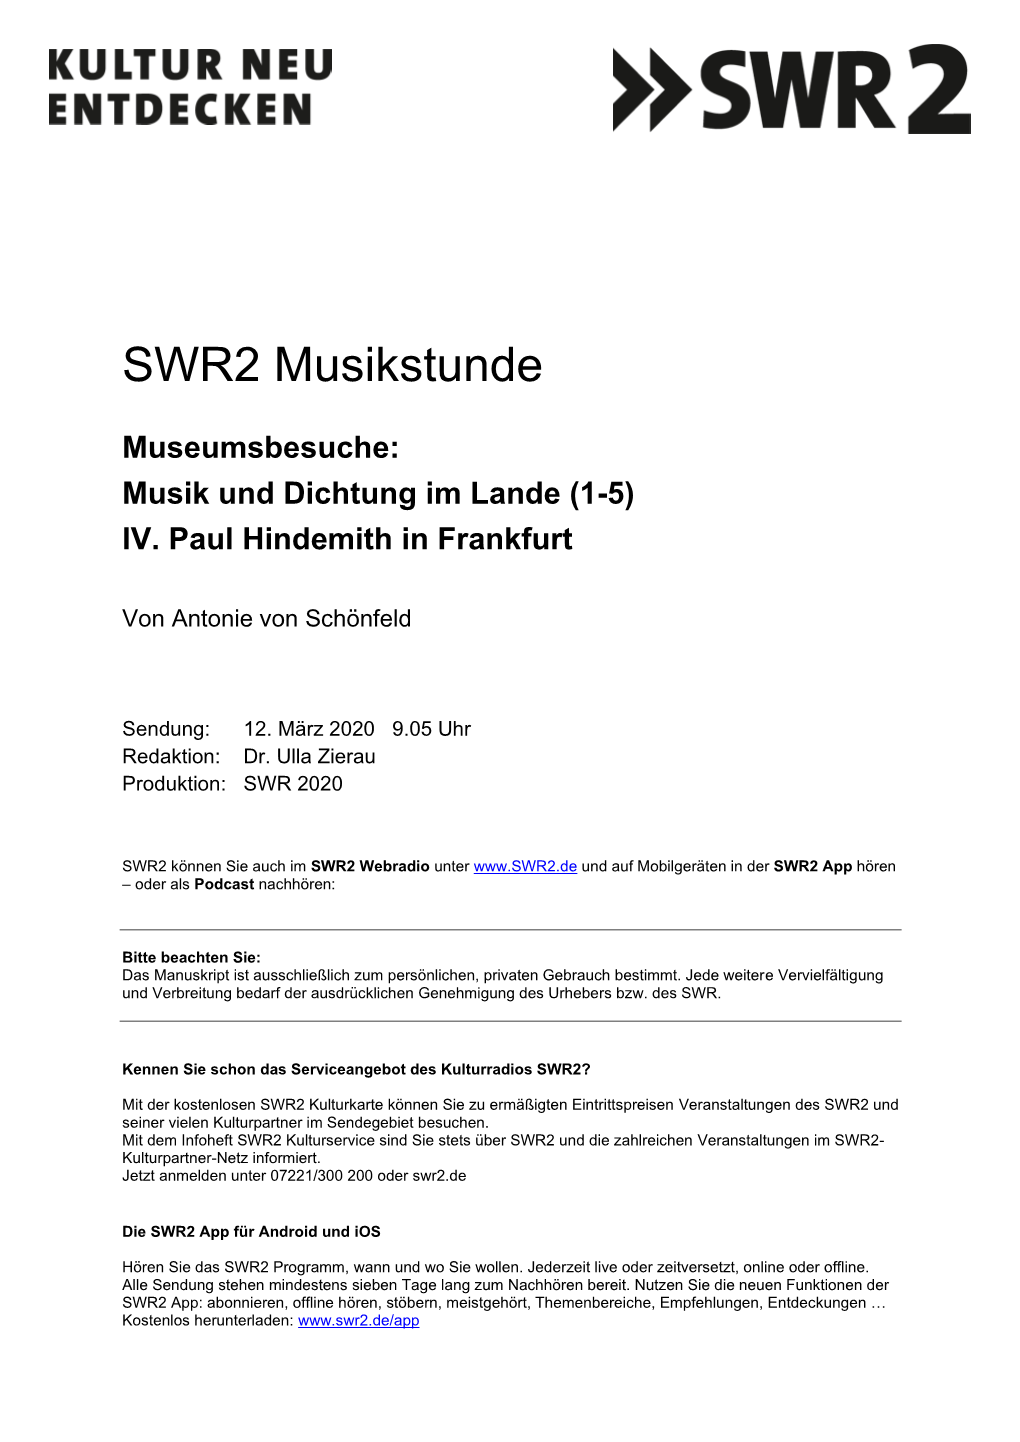 Museumsbesuche-4-Paul-Hindemith-In-Frankfurt-Swr2-Musikstunde-2020-03-12-100.Pdf